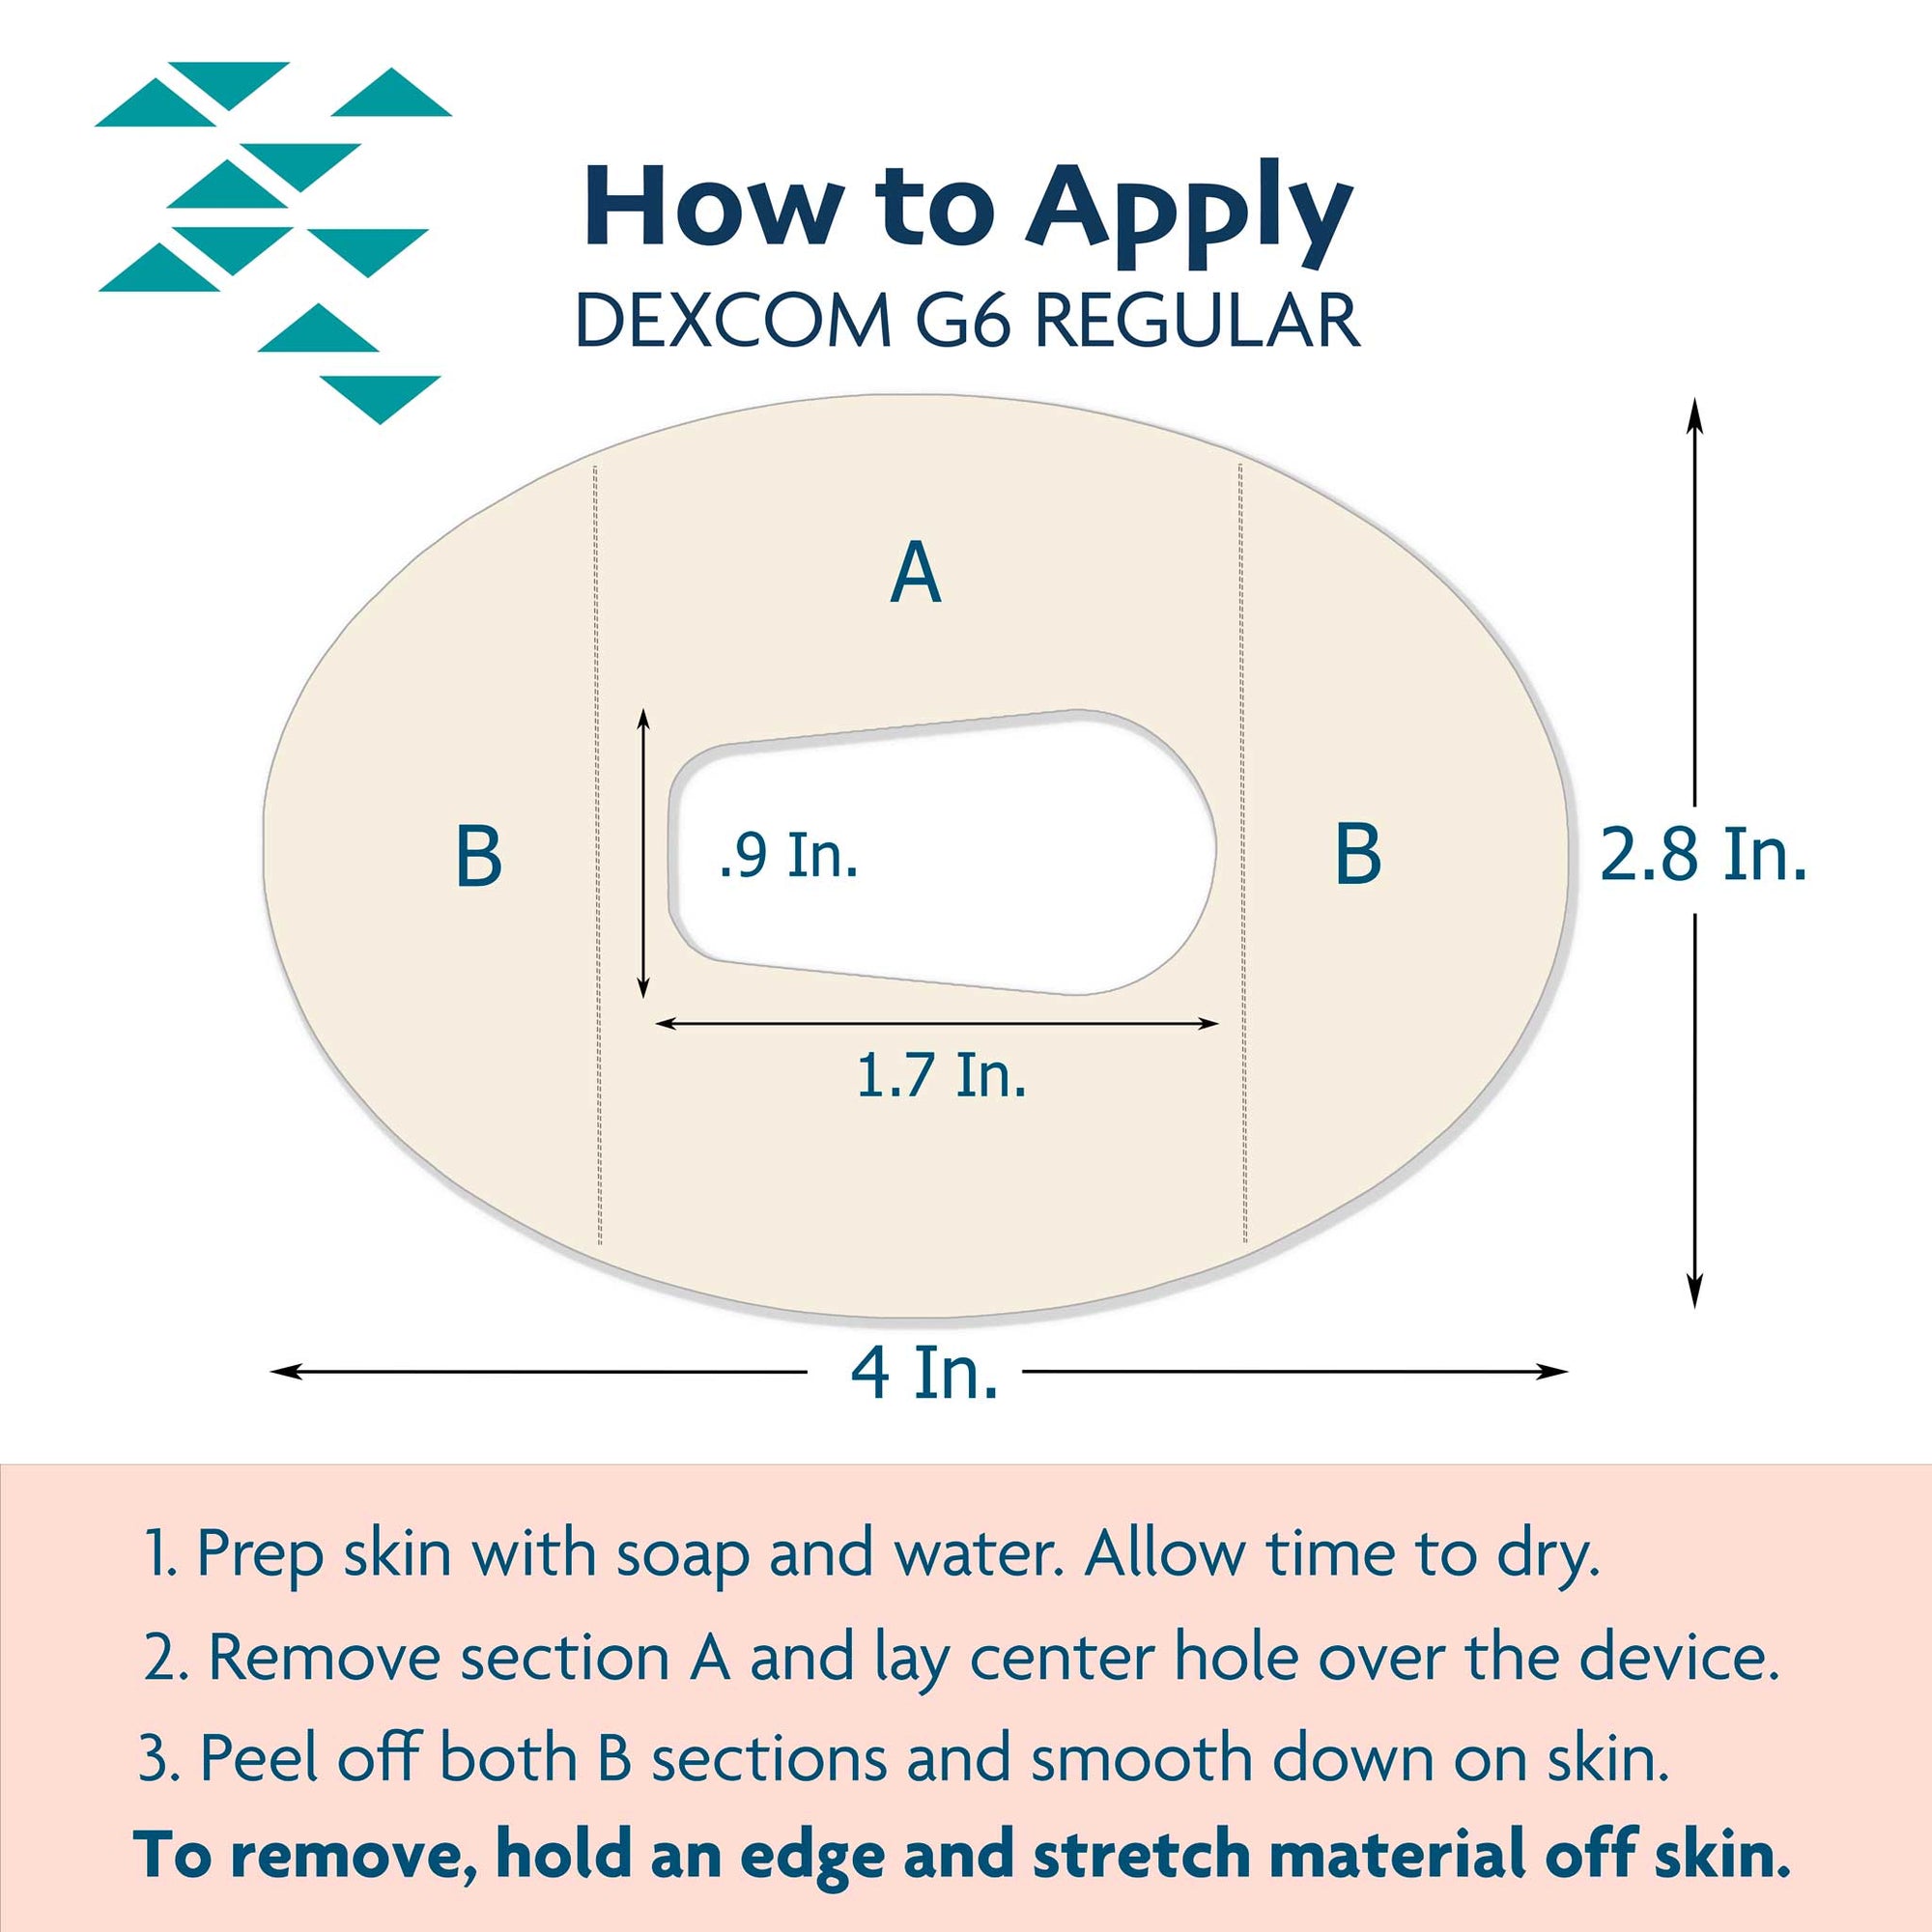 Dexcom G6 Adhesive application tutorial for proper use